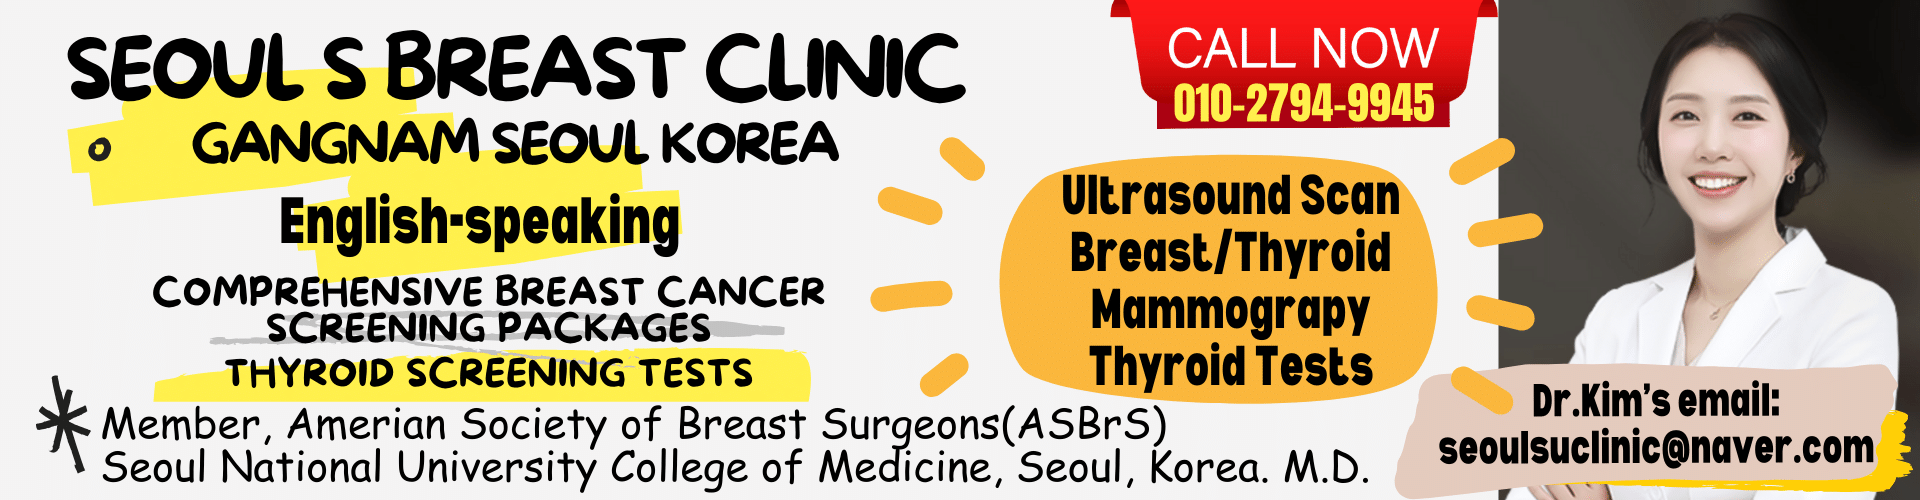 breast cancer screening seoul